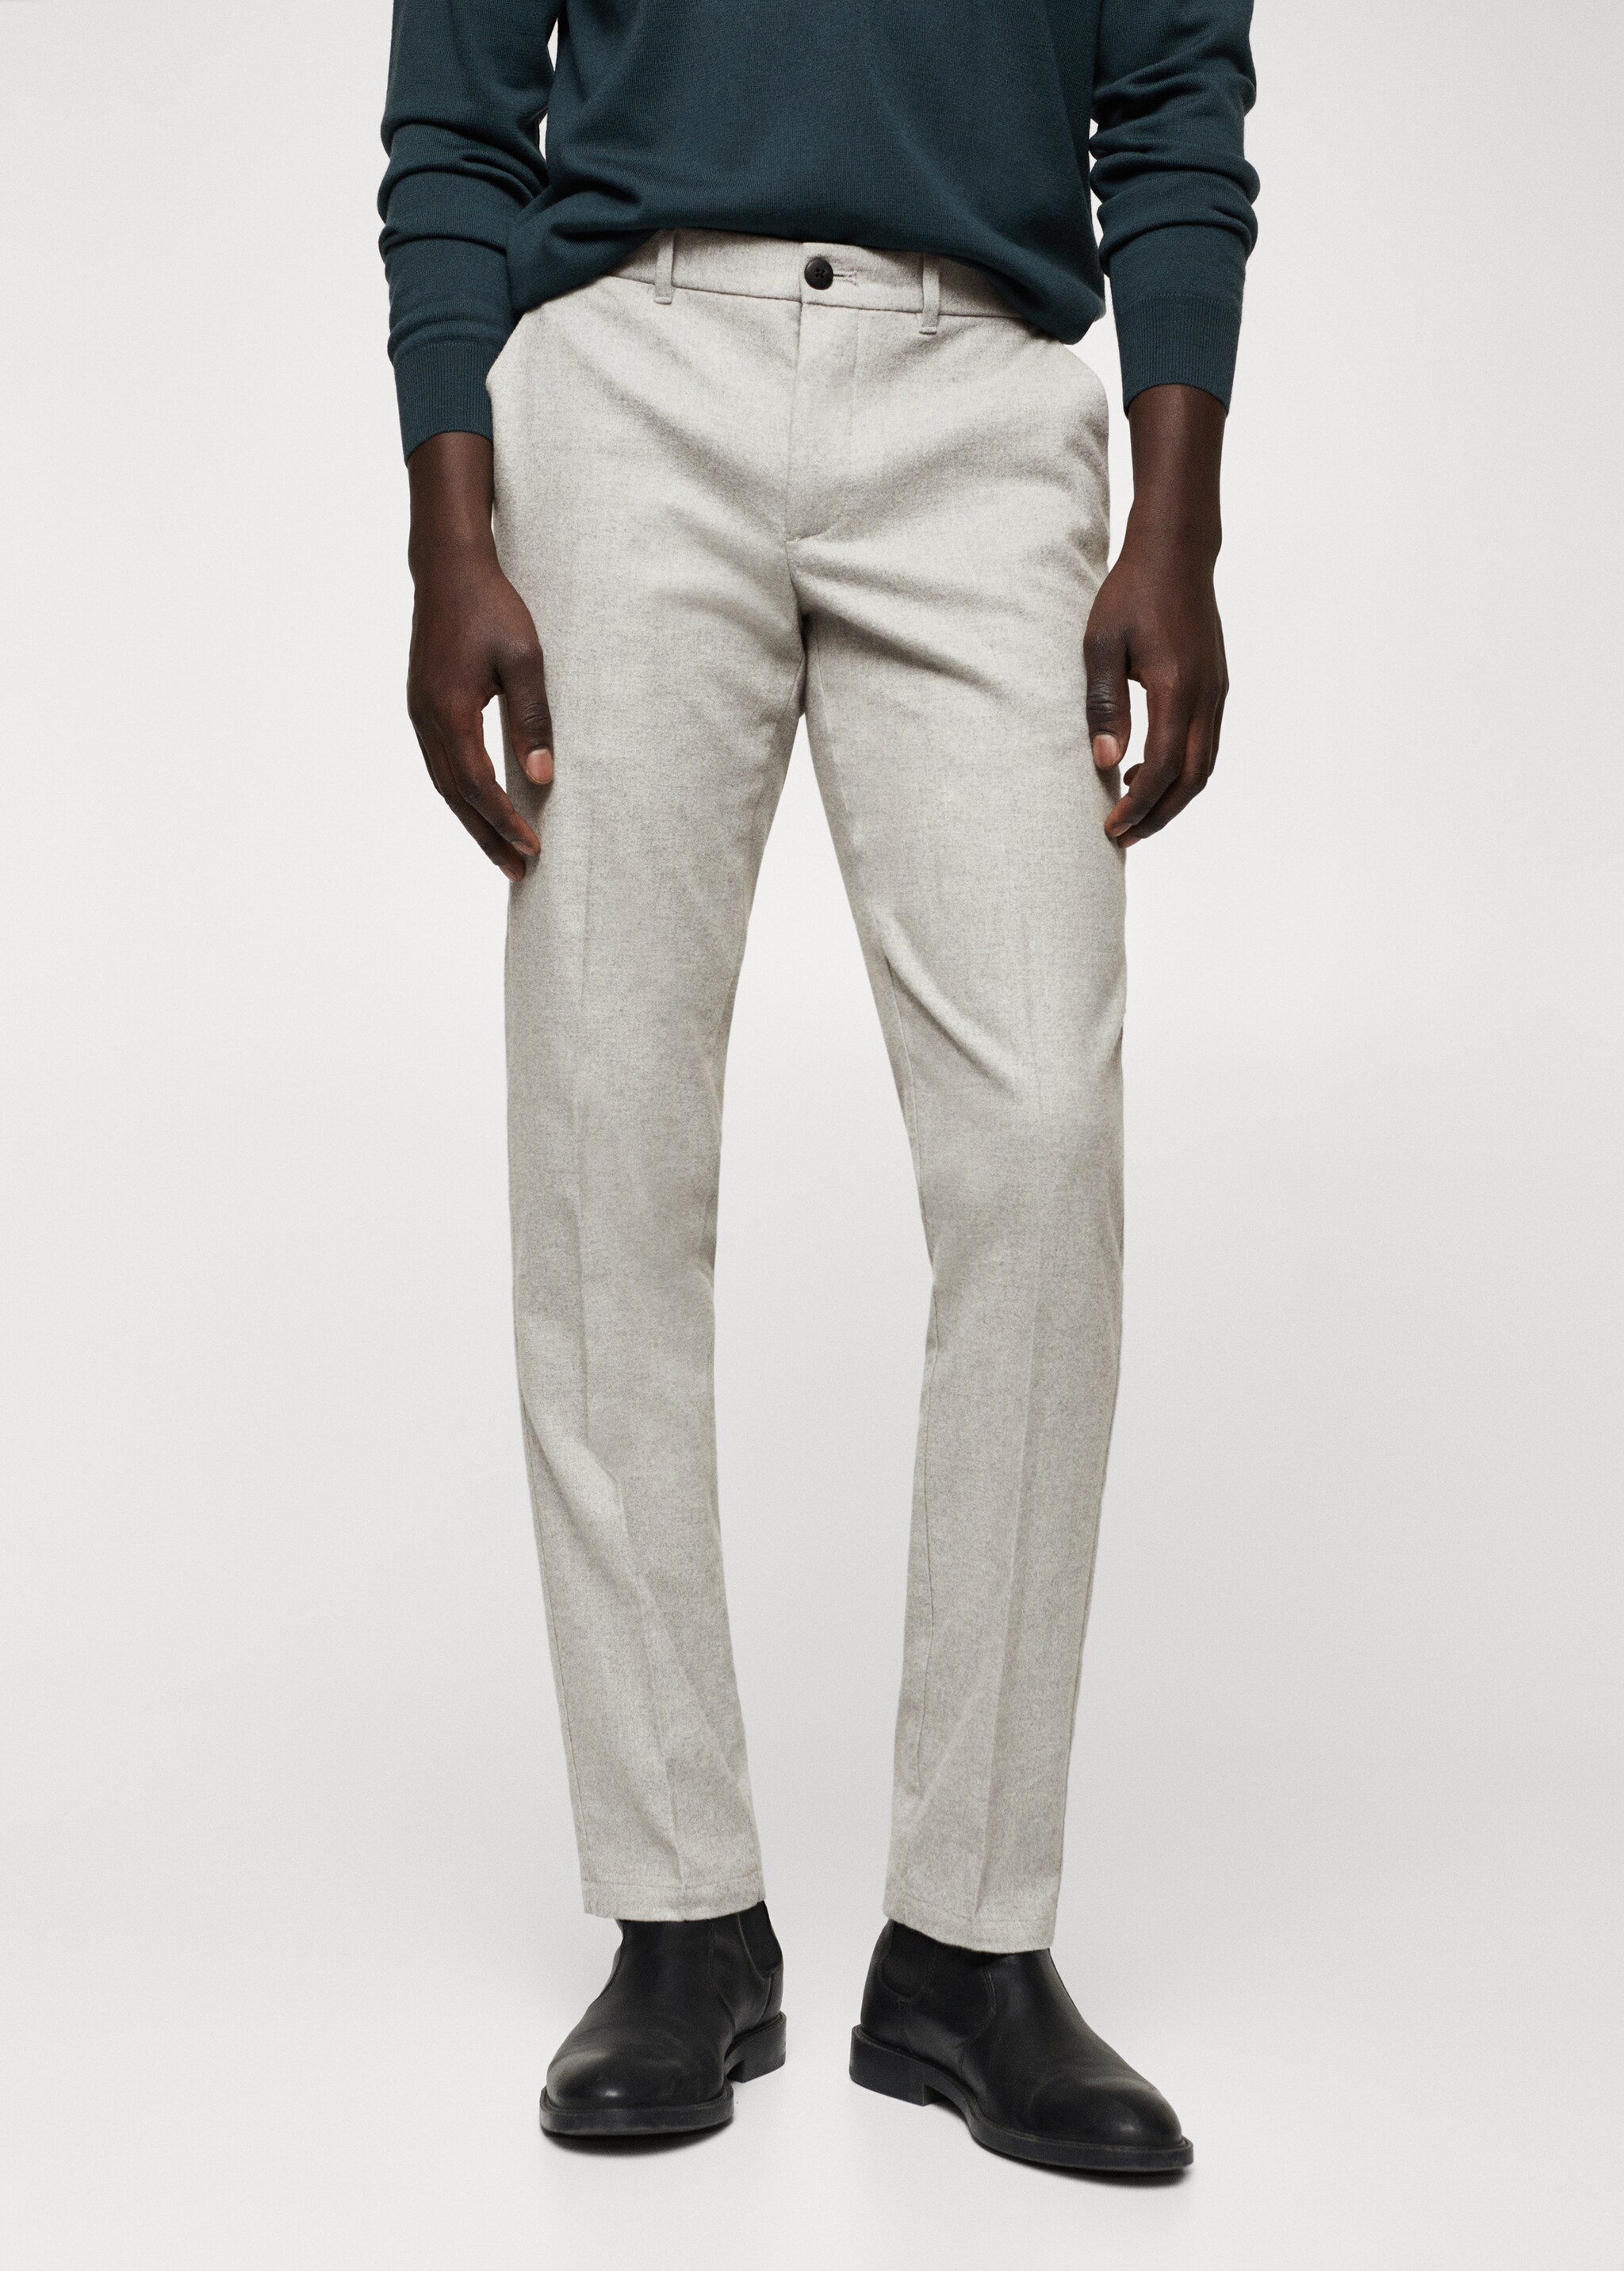 Pantalón slim fit algodón - Plano medio